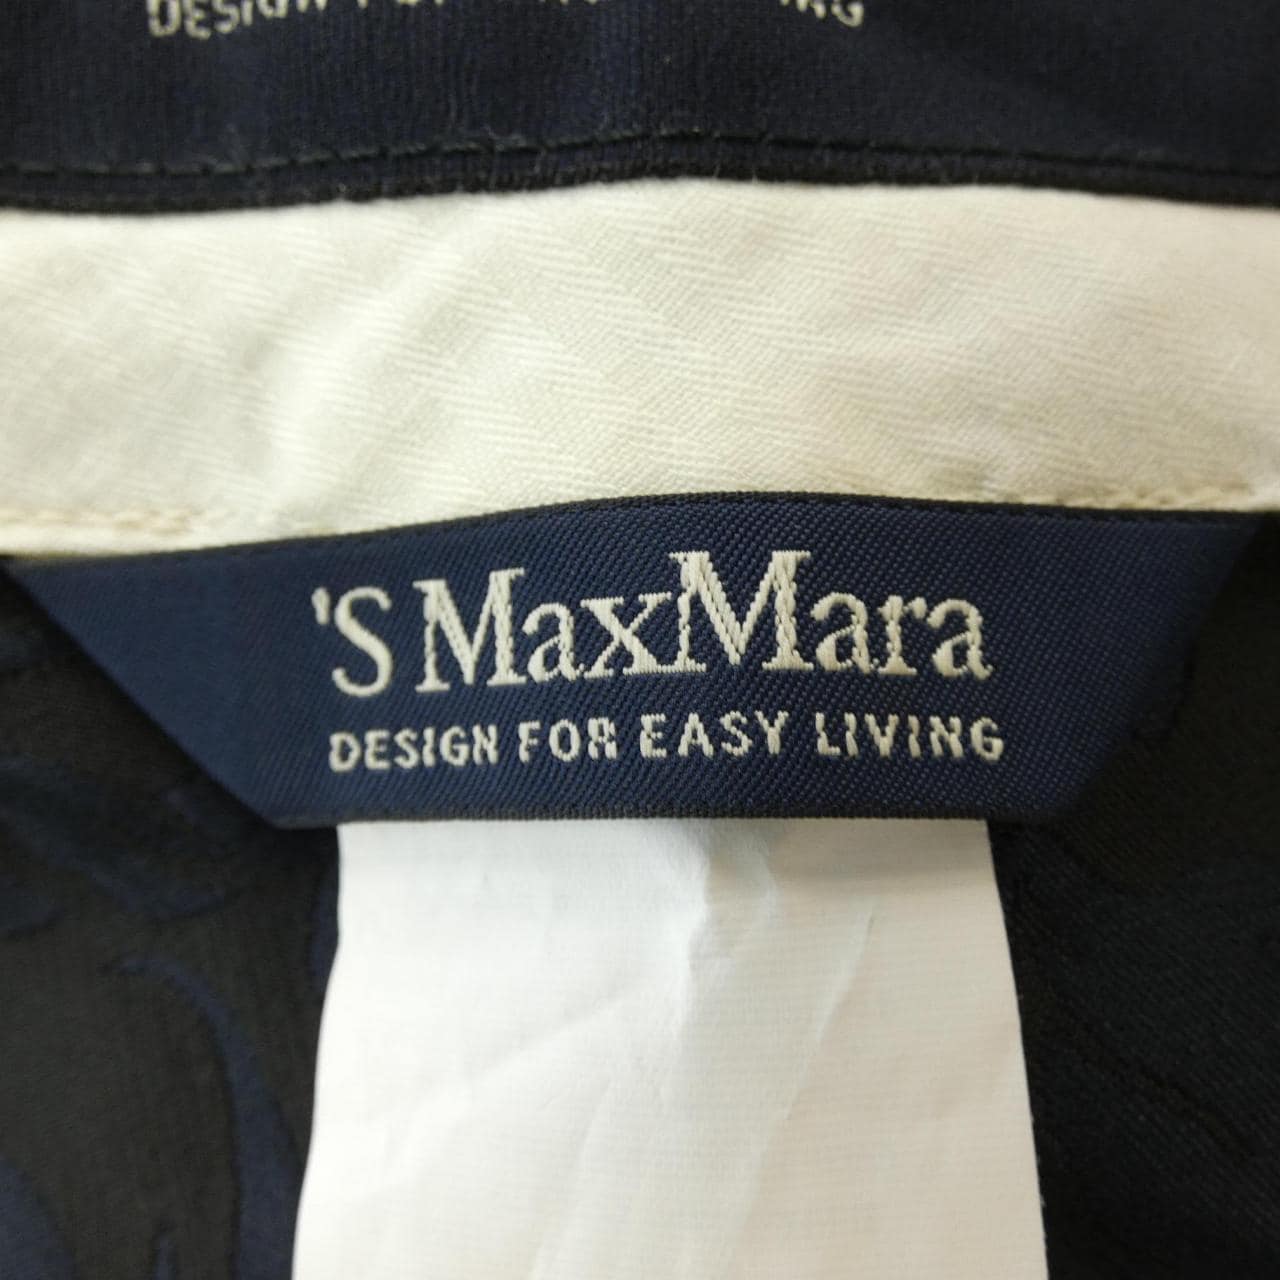 S Max Mara的馬克斯瑪拉褲子